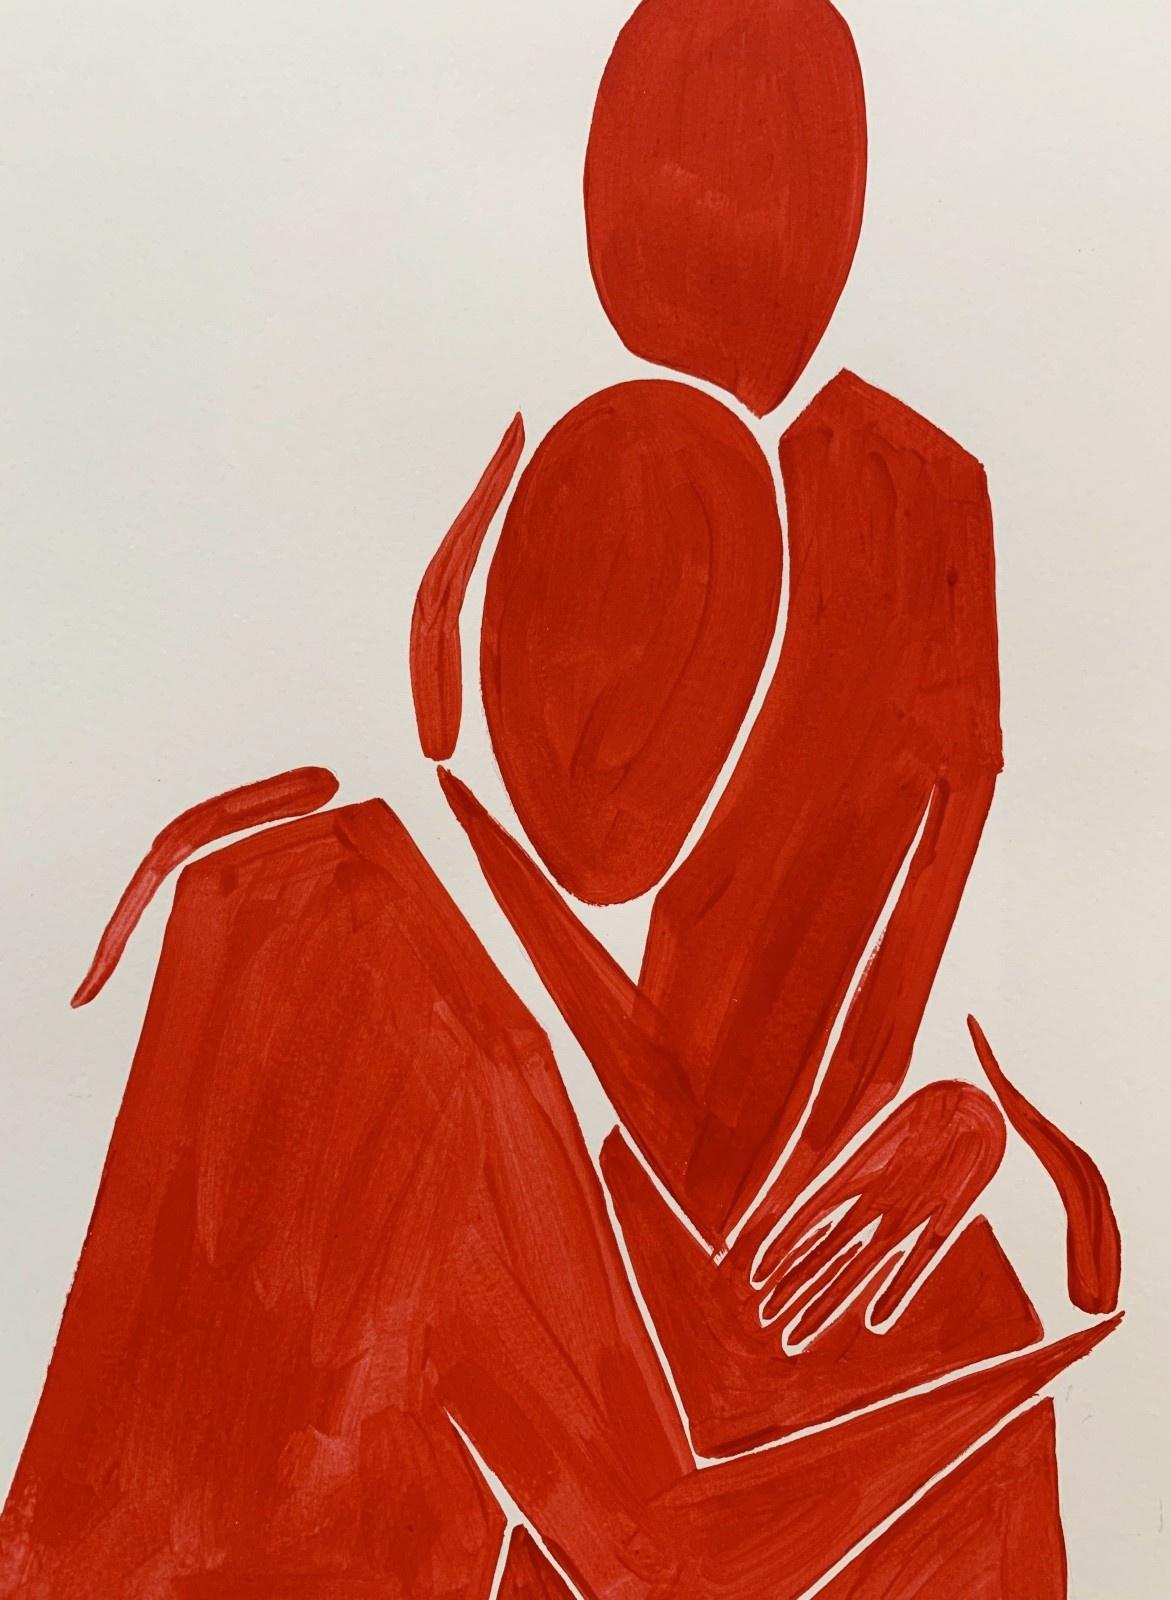 In embrace - Figurative acrylic painting, Minimalist, Emerging artist - Red Figurative Painting by Waleria Matelska